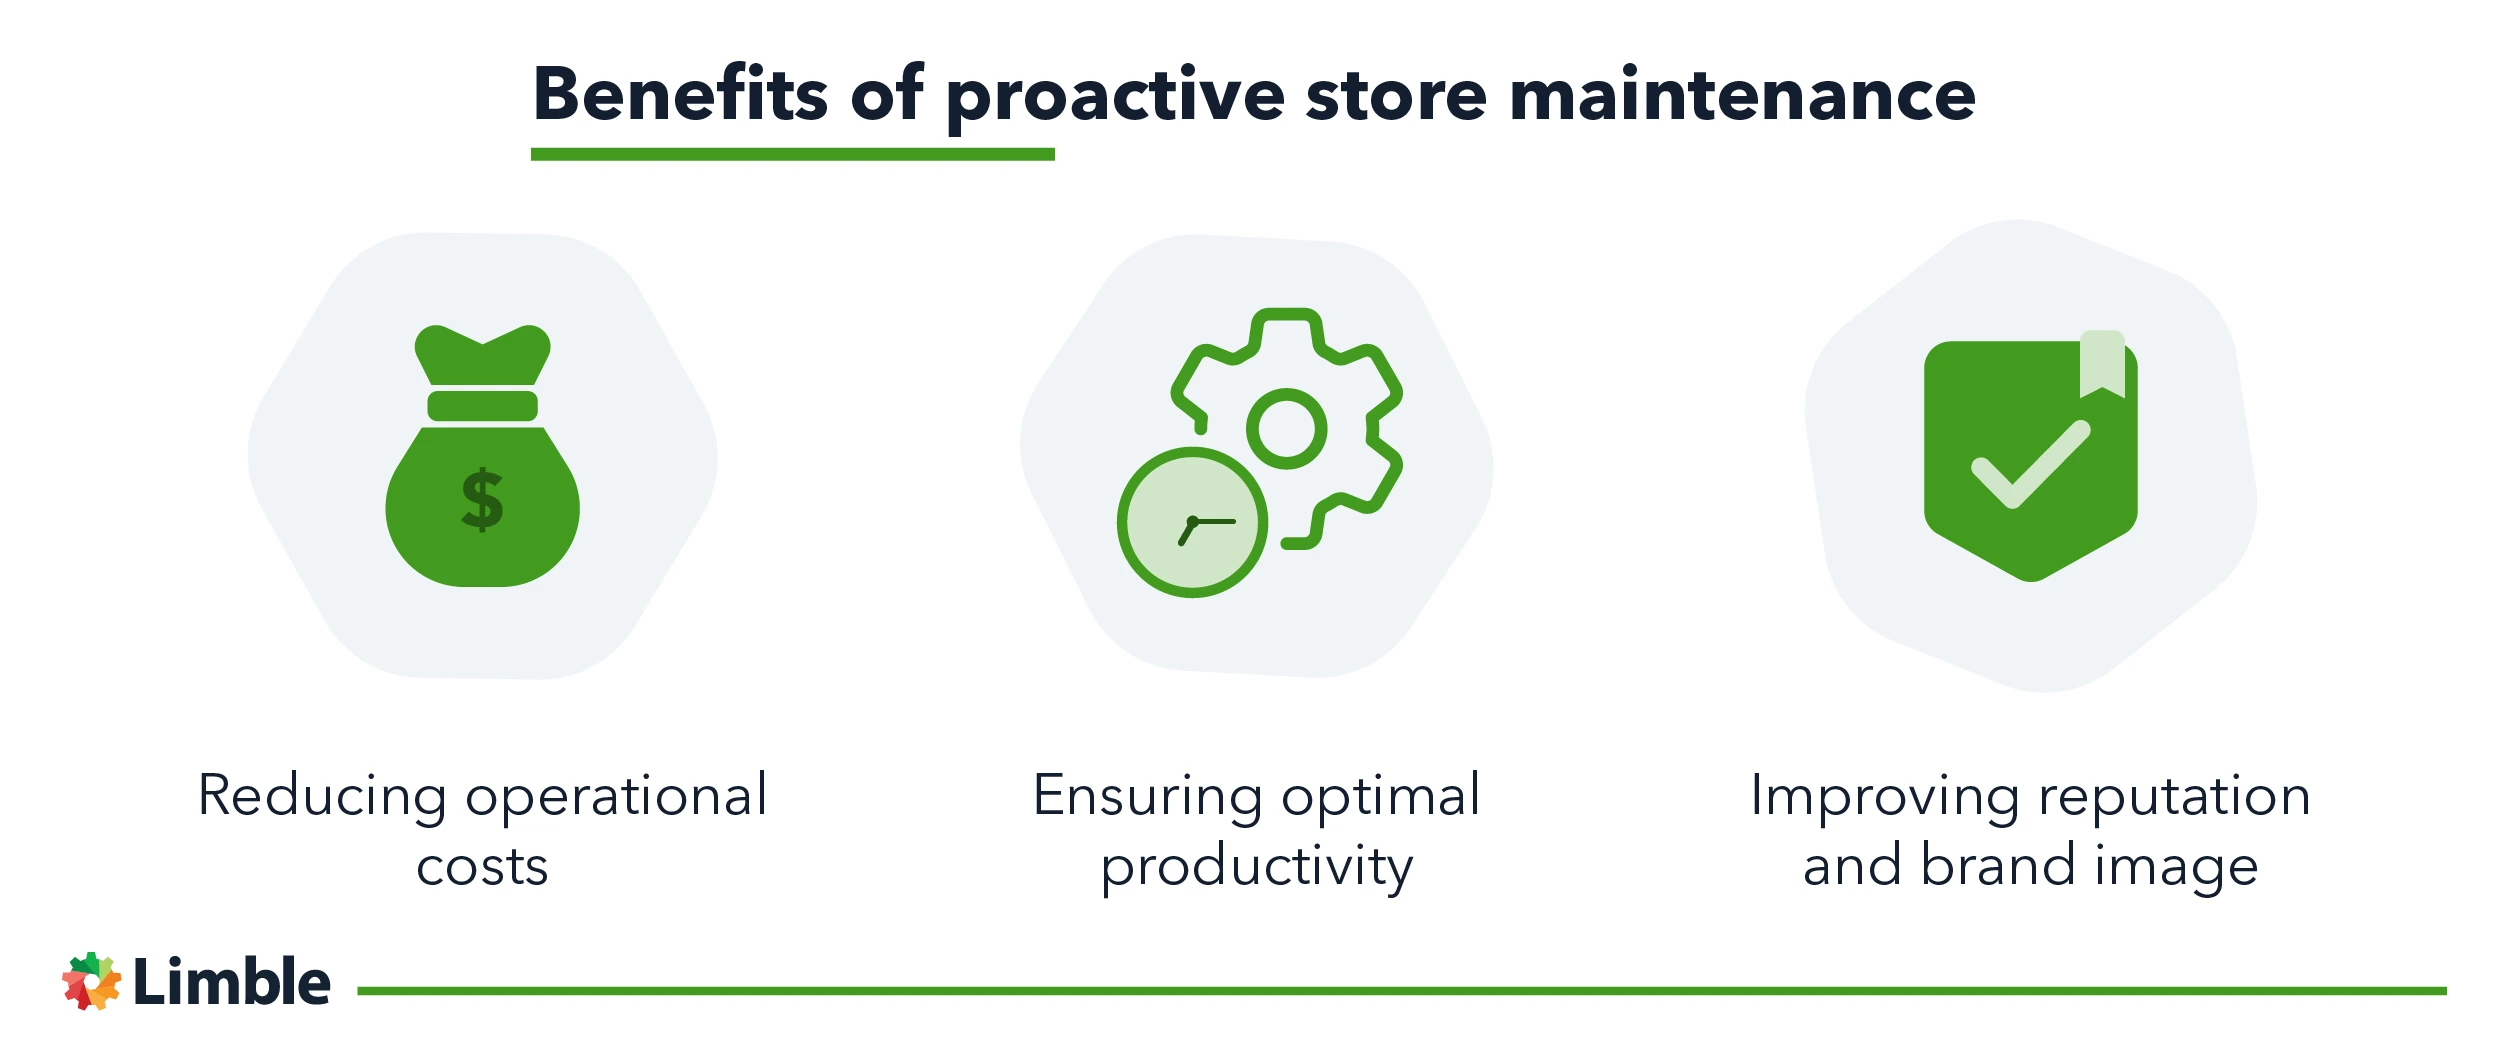 Benefits of proactive store maintenance